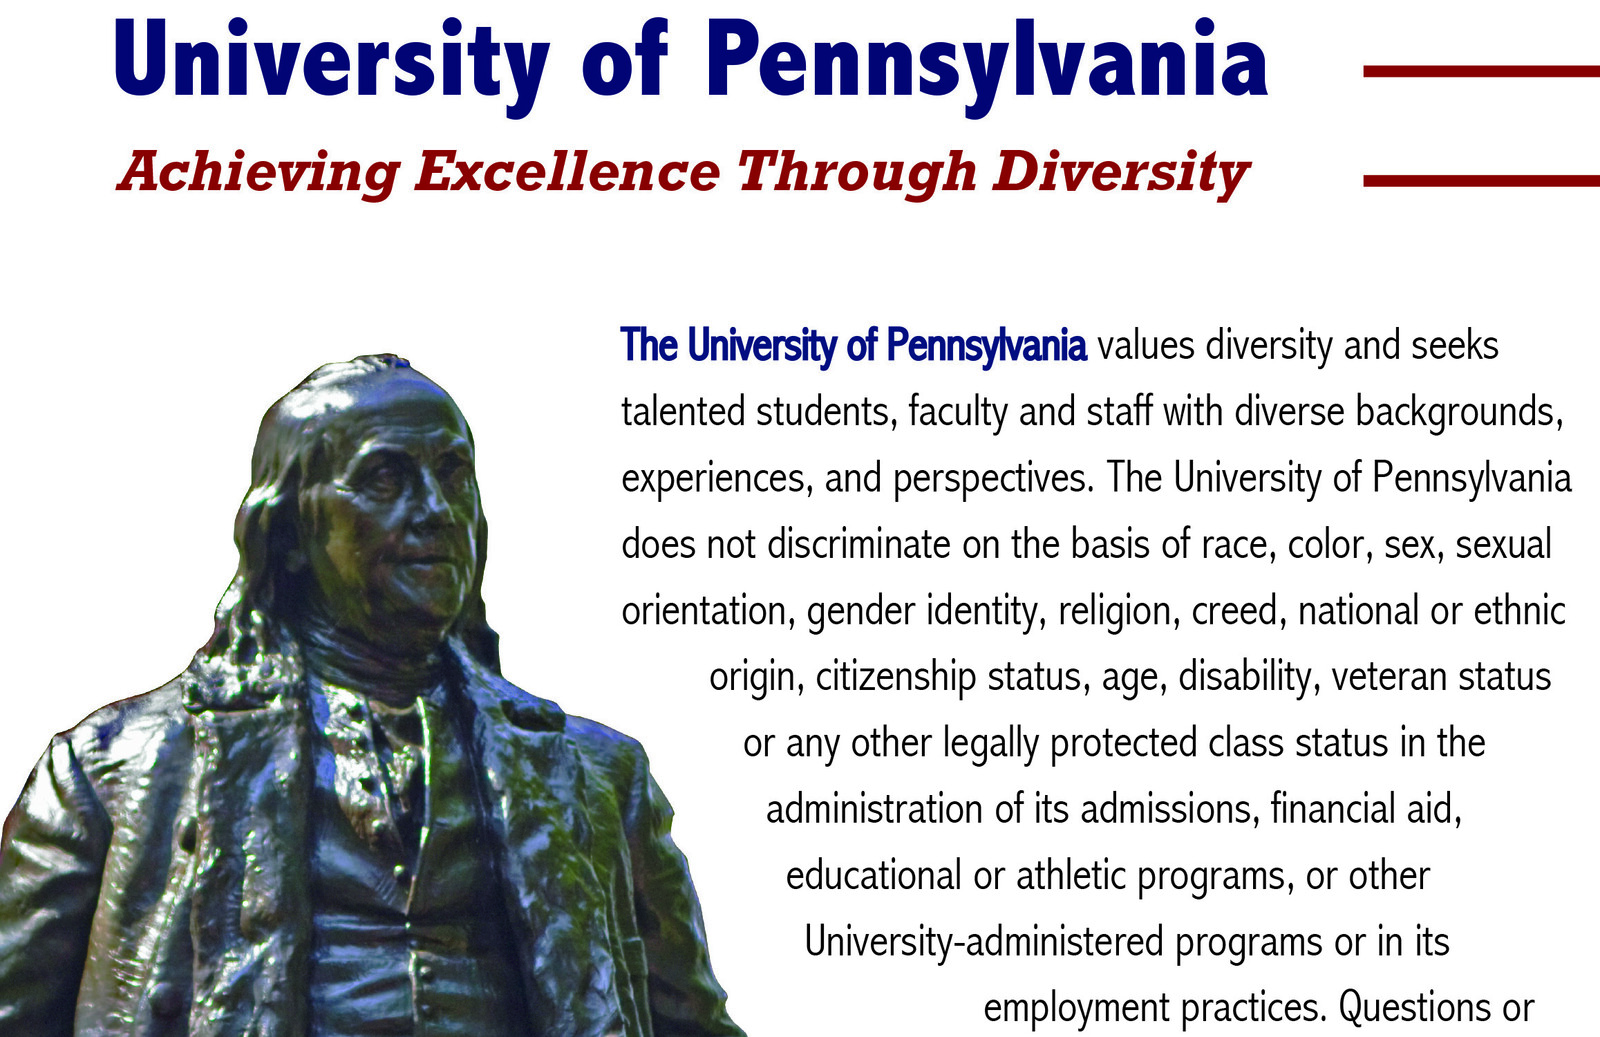 University of Pennsylvania achieving excellenec through diversity